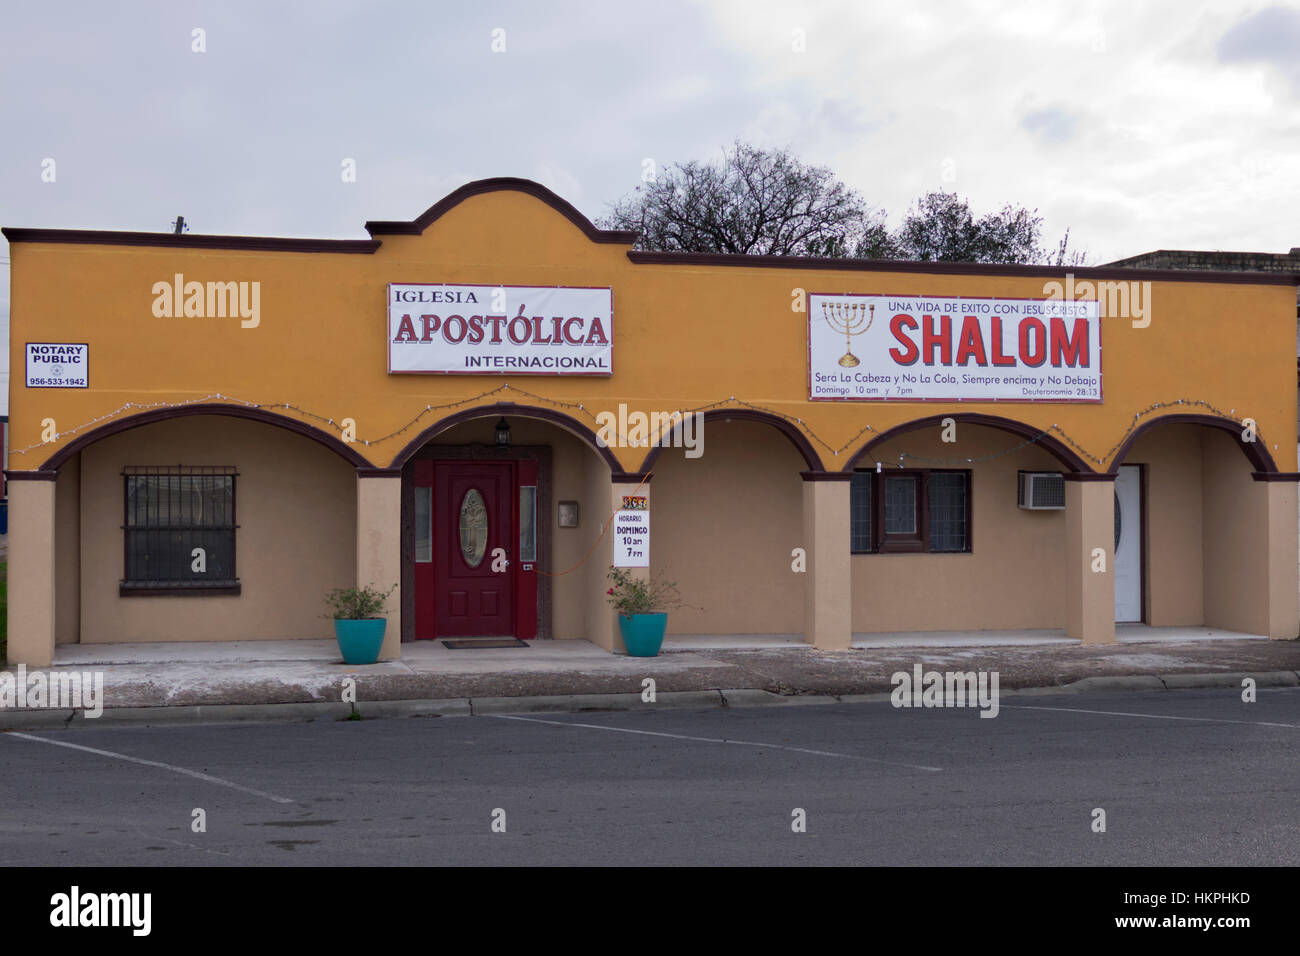 Small Apostolica church in Alamo, TX Stock Photo